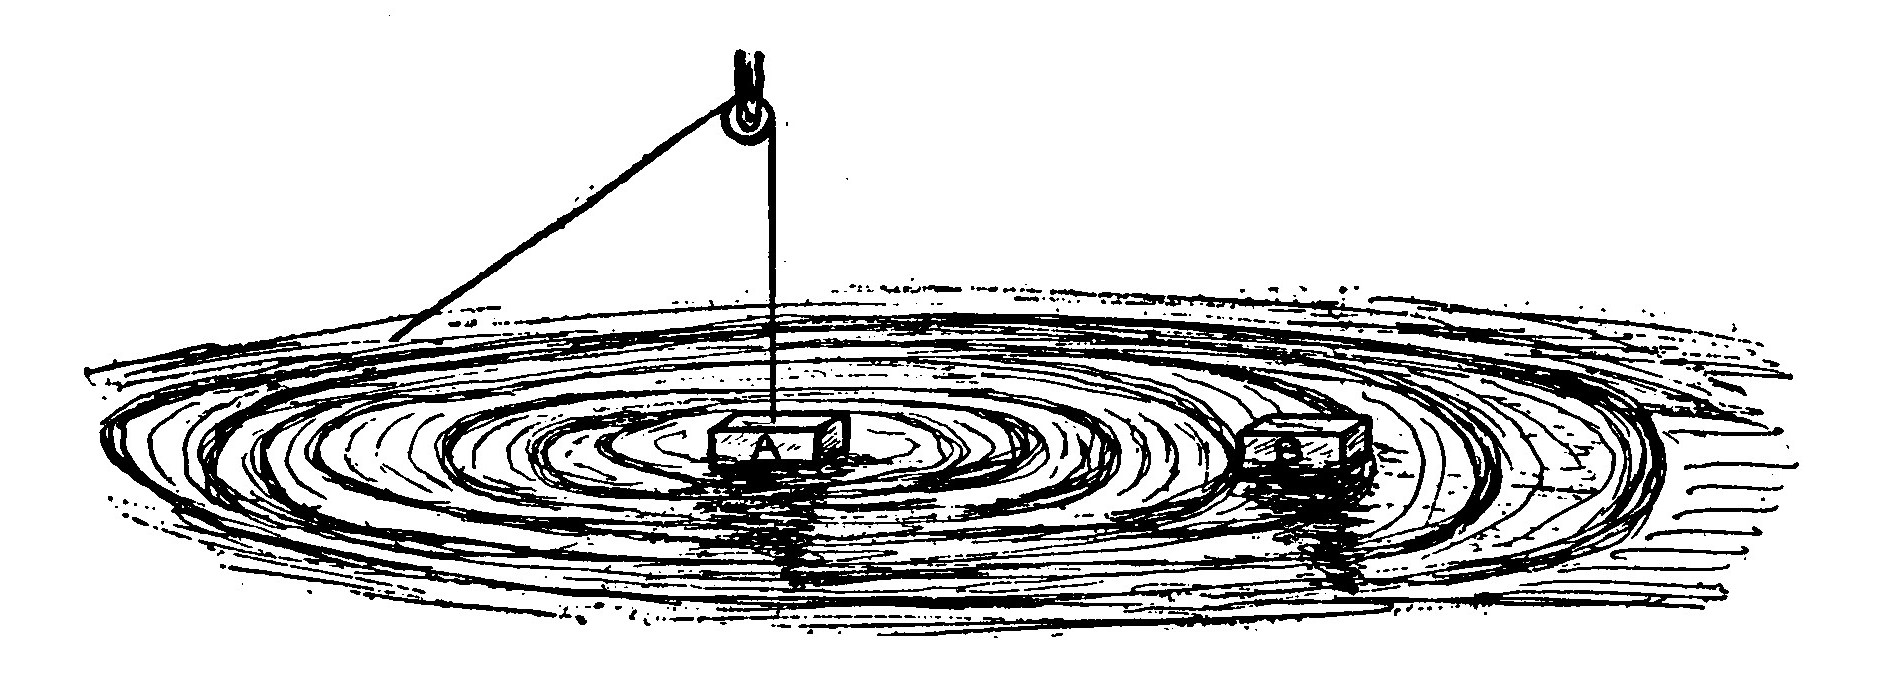 Fig. 3. "Hydraulic" Transmitter and Receptor.